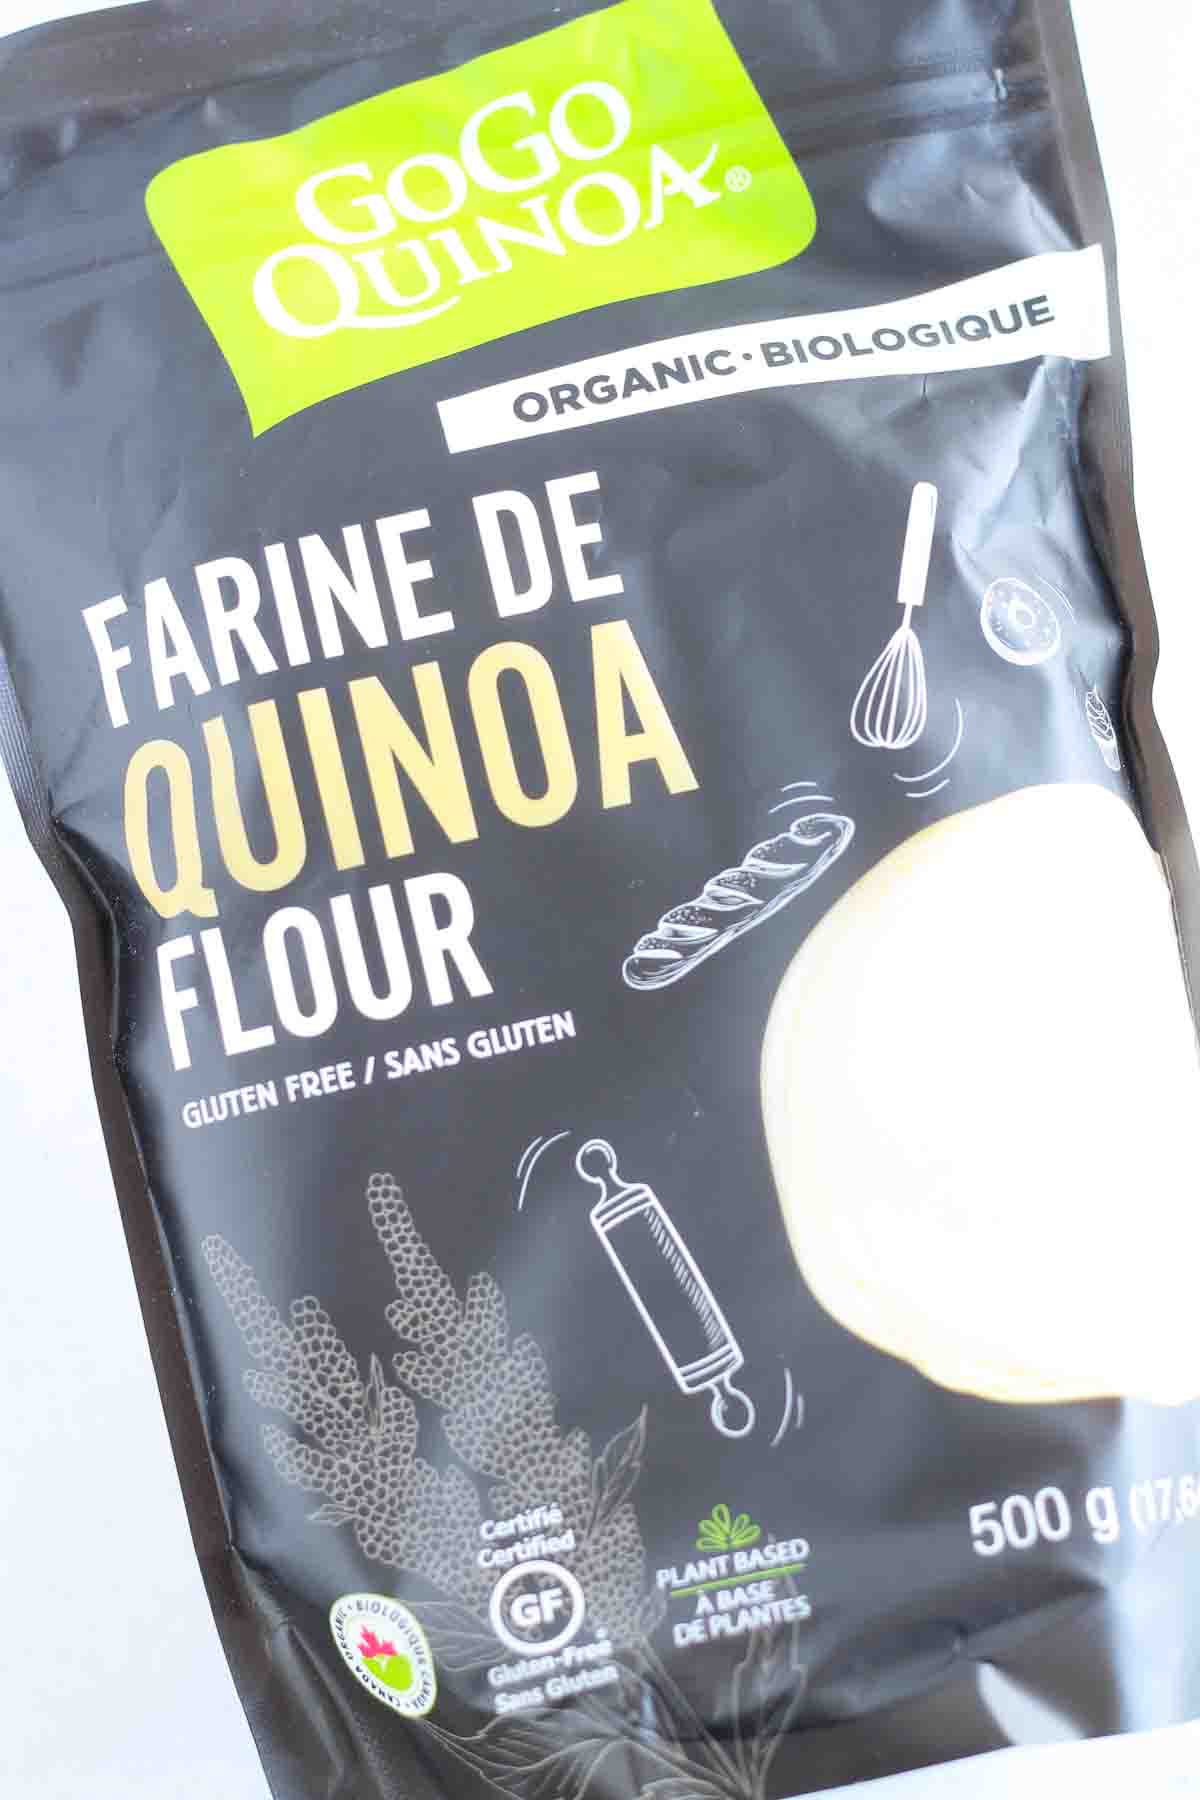 a package of quinoa flour